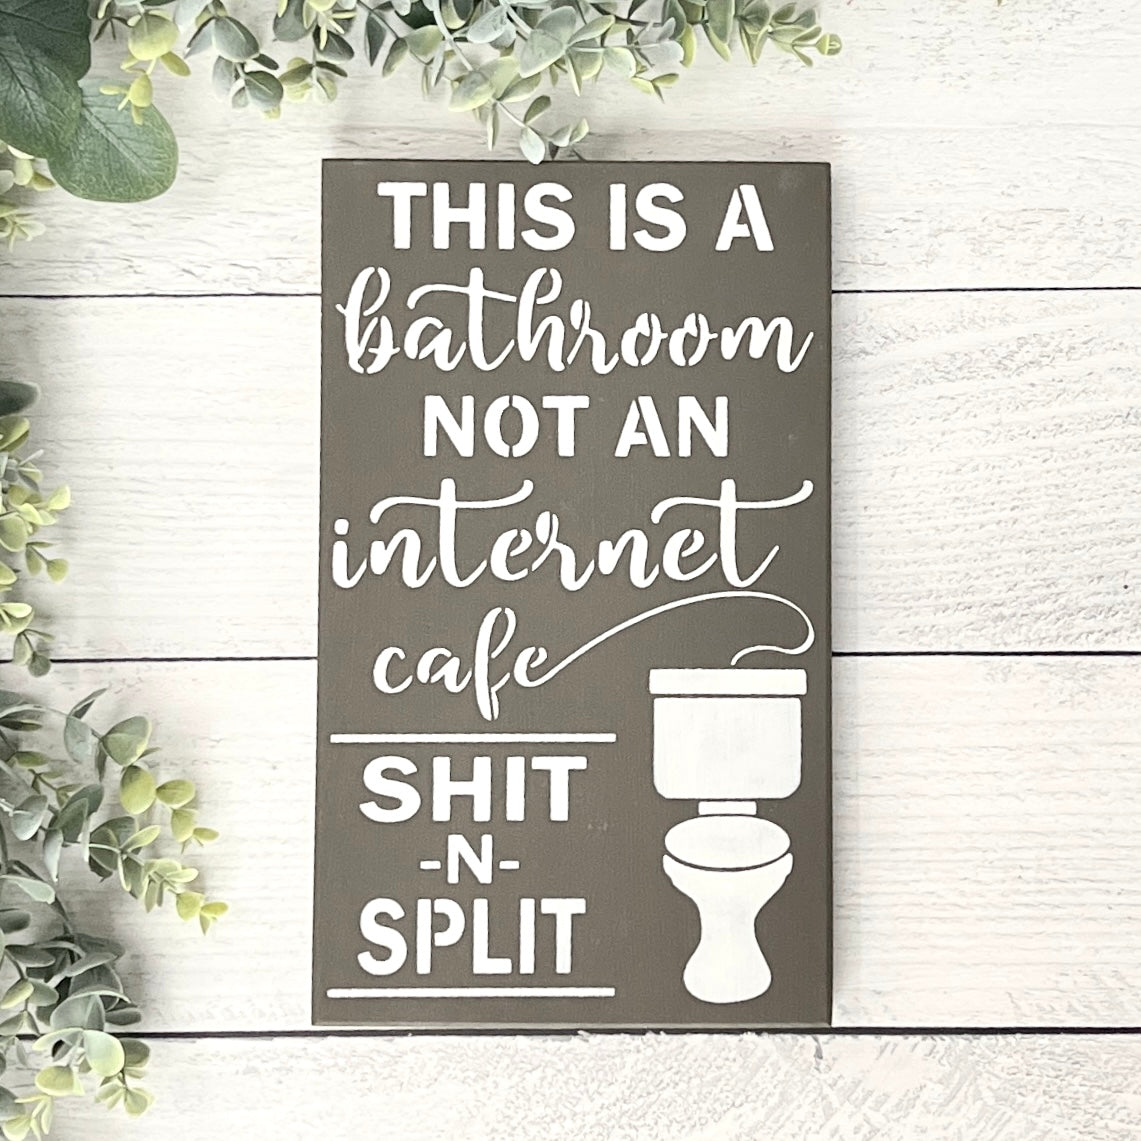 Shit-n-split funny bathroom sign